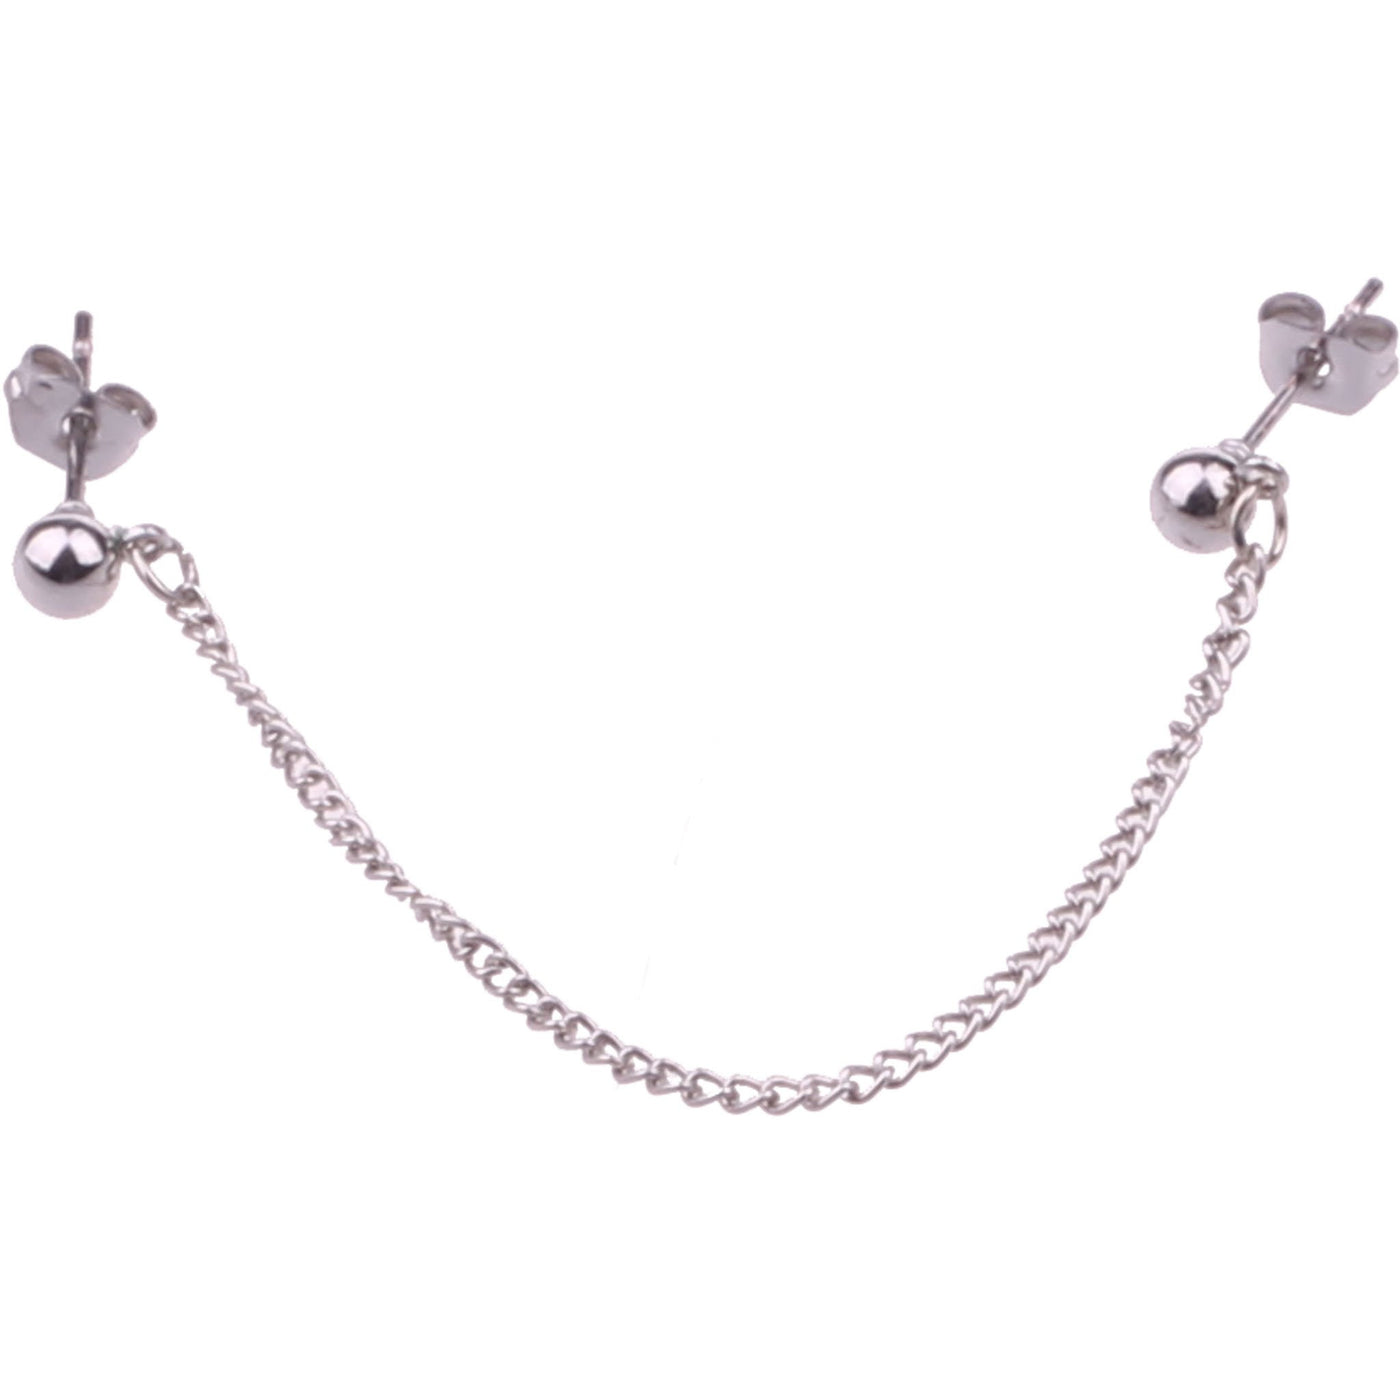 2-hole earrings chain